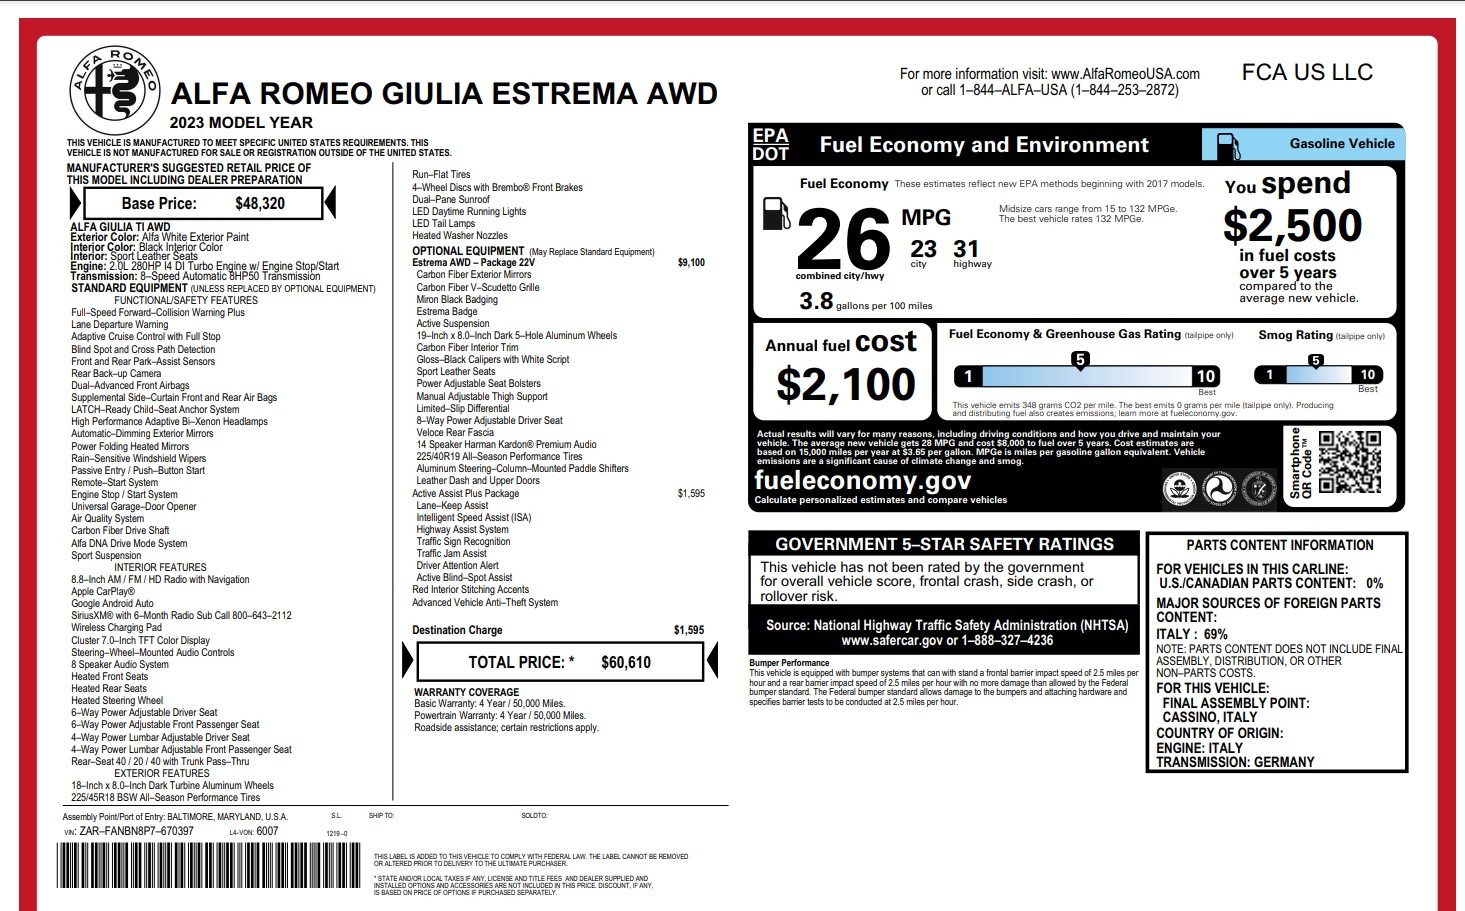 New-2023-Alfa-Romeo-Giulia-Estrema